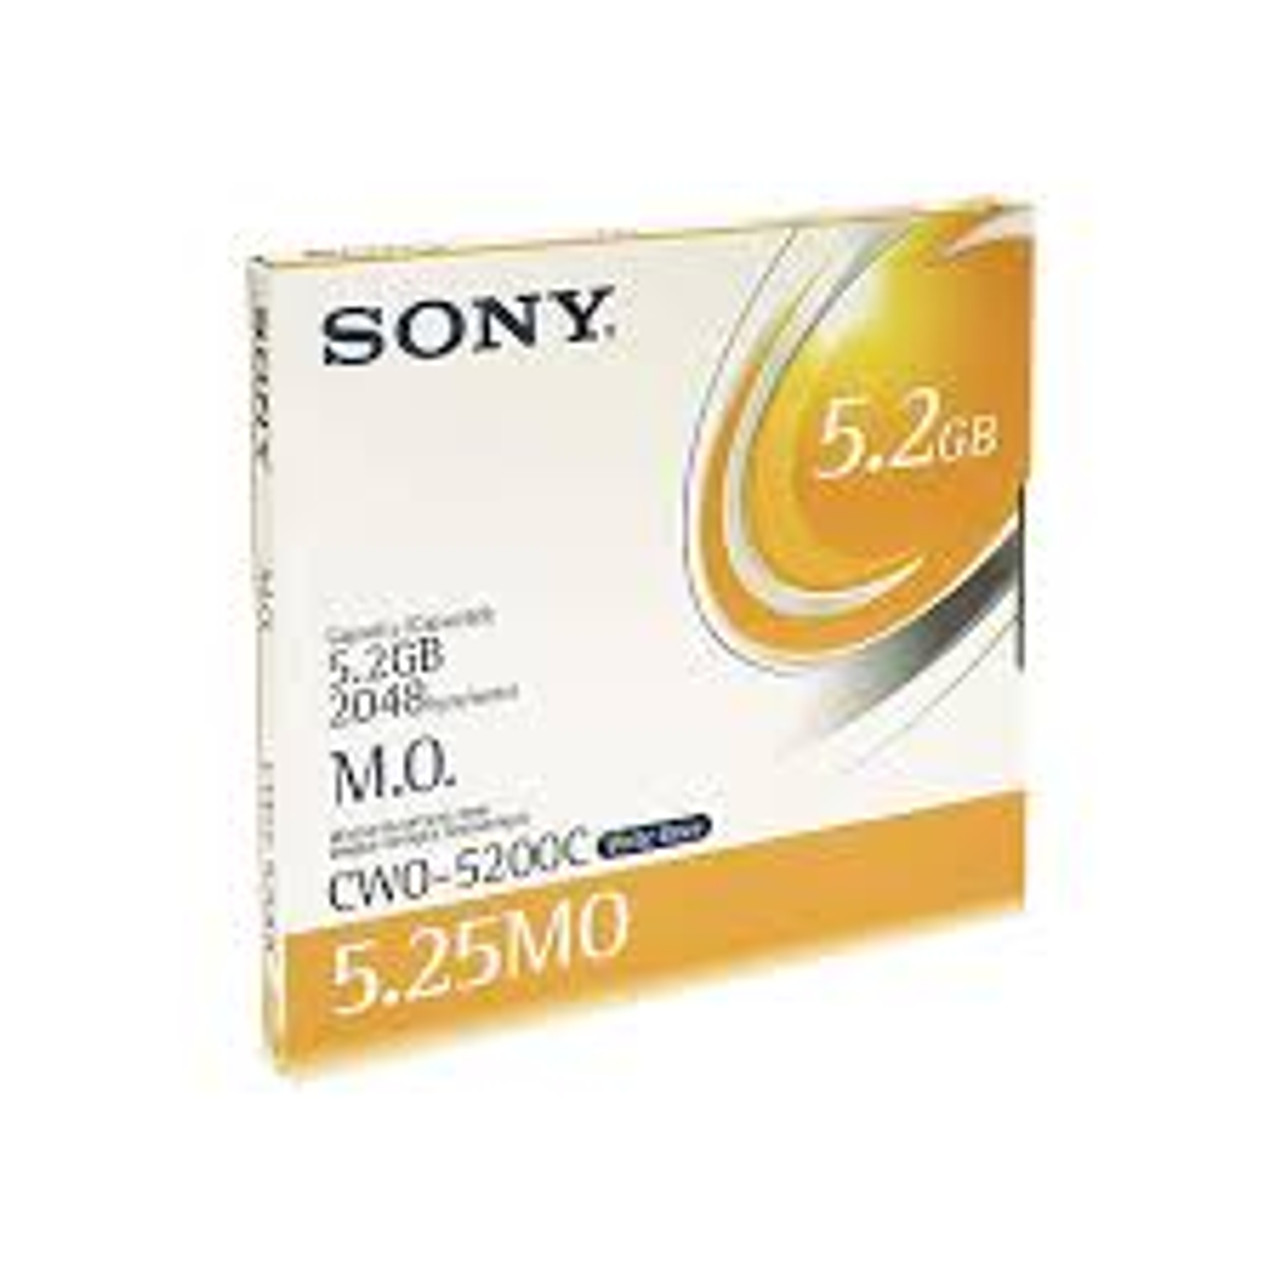 Sony 5.25" WORM Optical Disk 5.2GB 8x 2048 Bytes/s